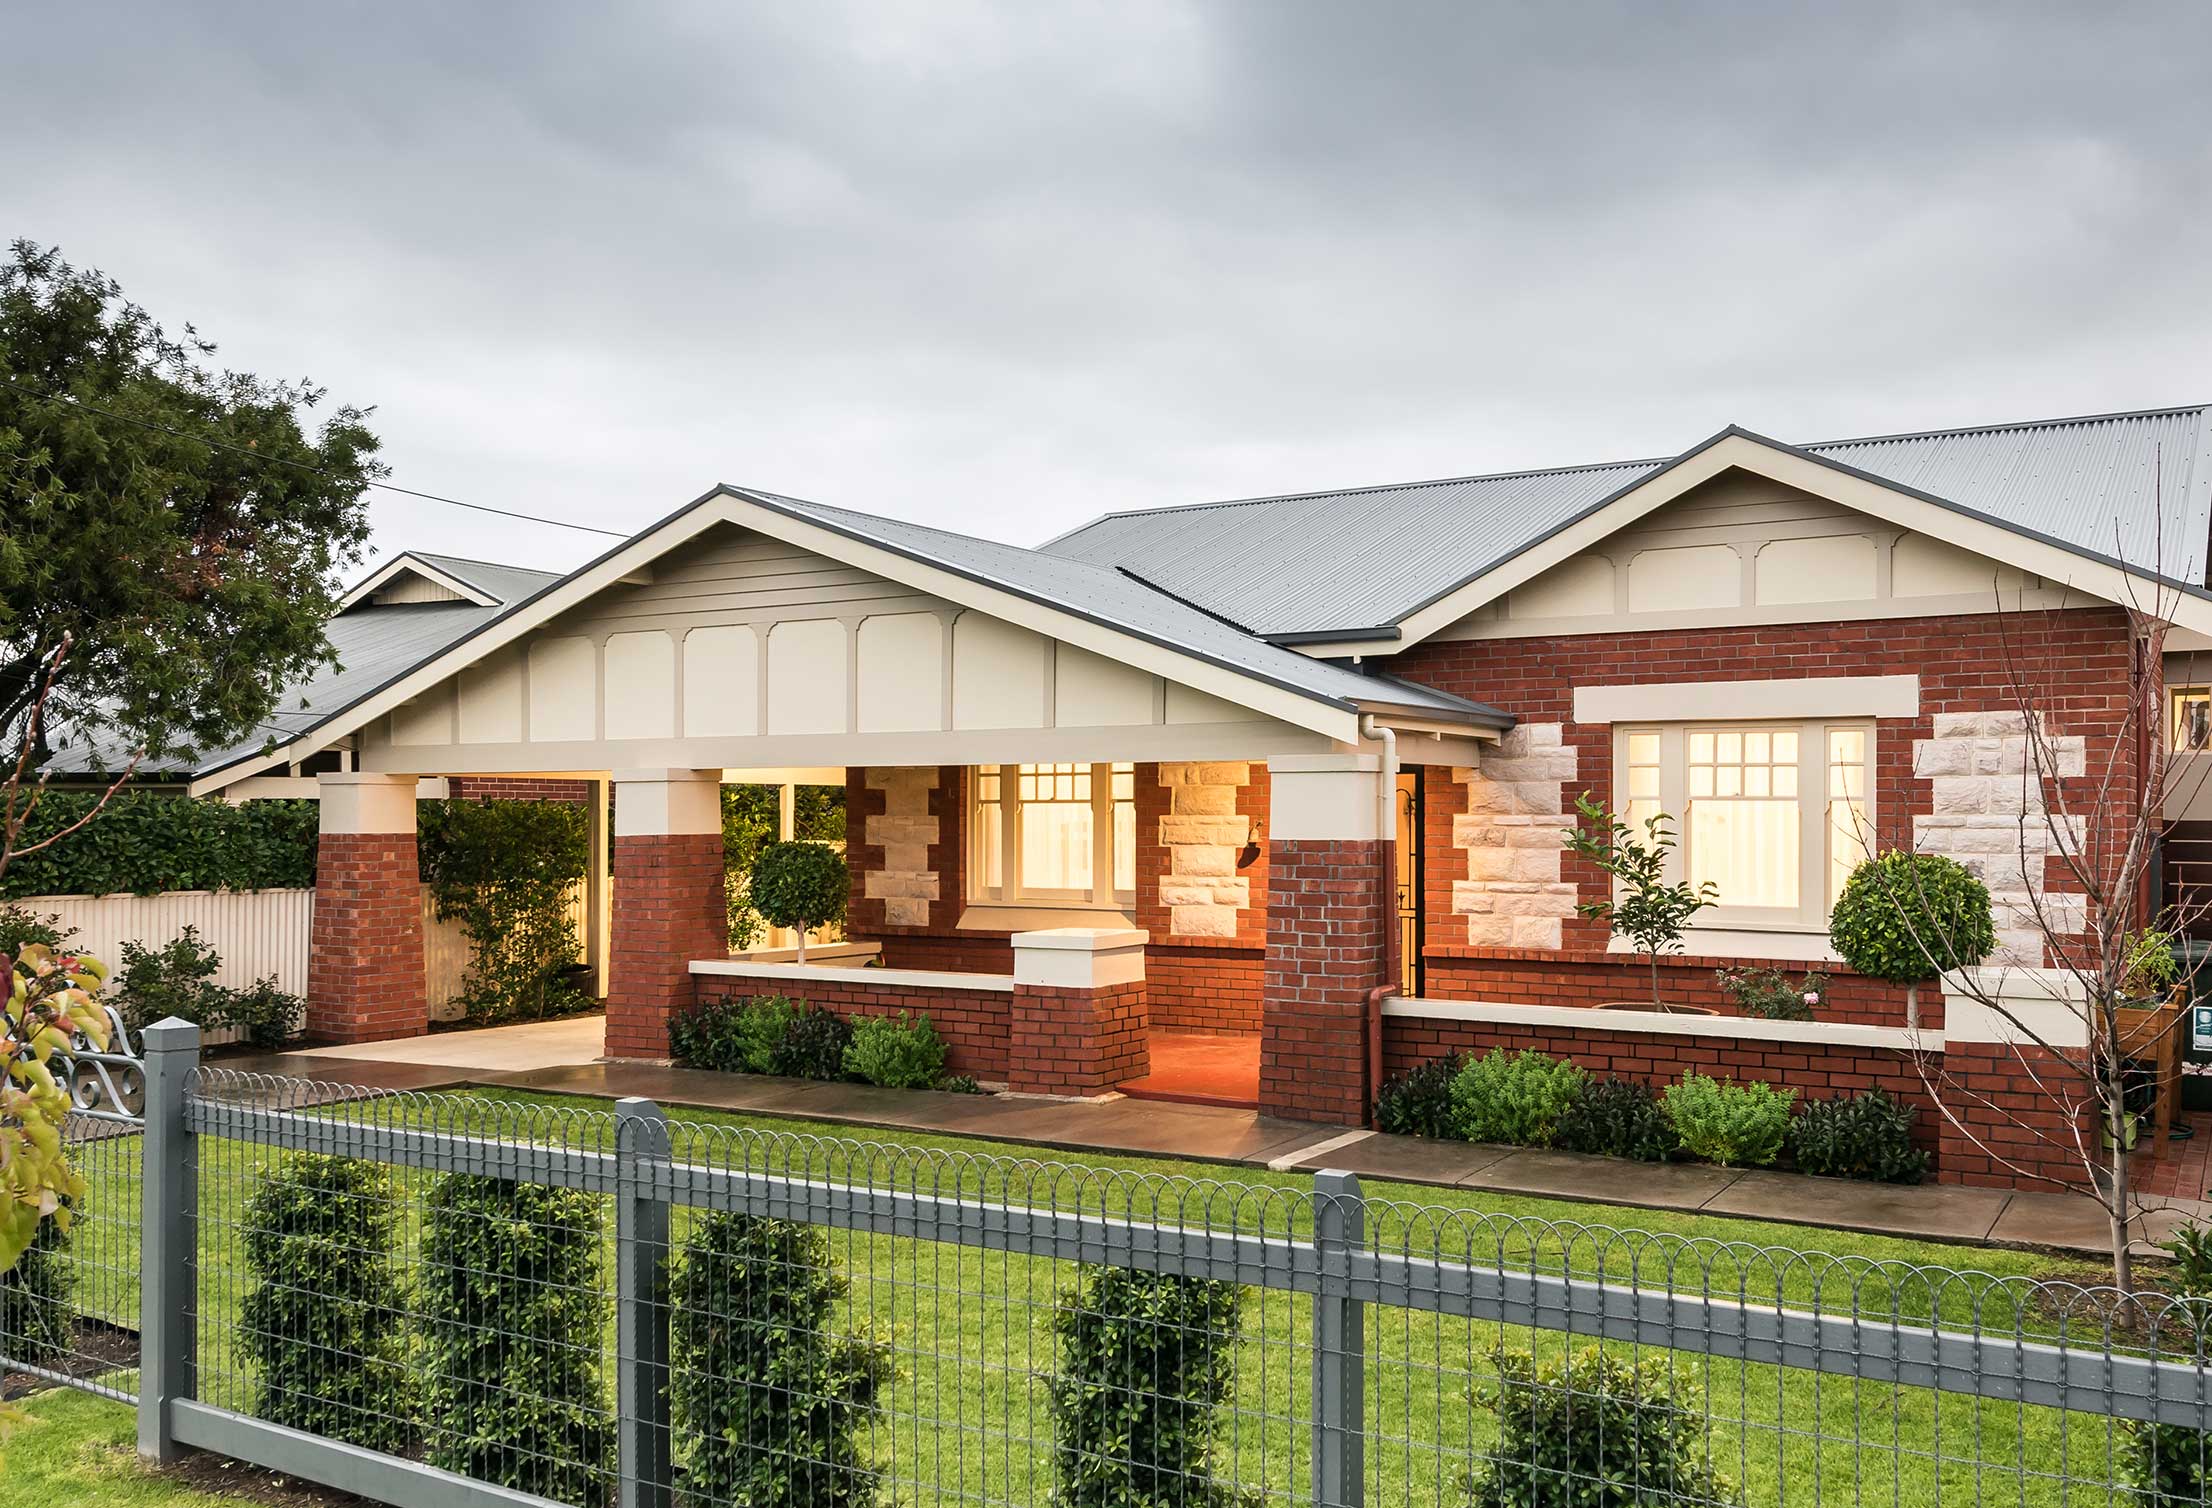 turnbull-built-bungalow-renovations-south-australia.jpg